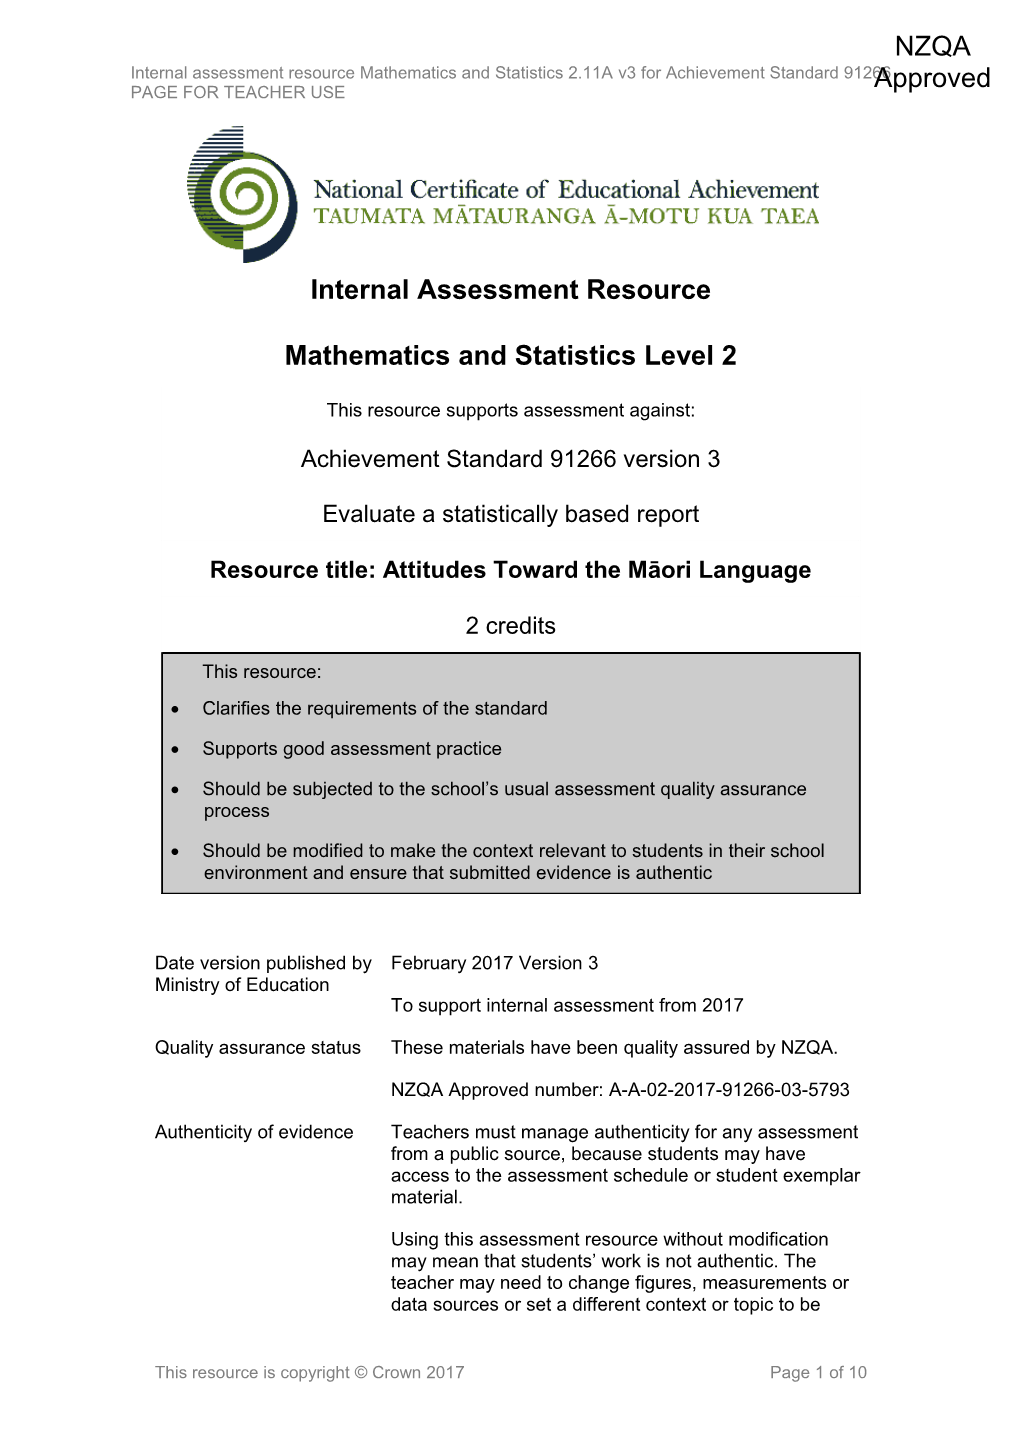 Level 2 Mathematics and Statistics Internal Assessment Resource